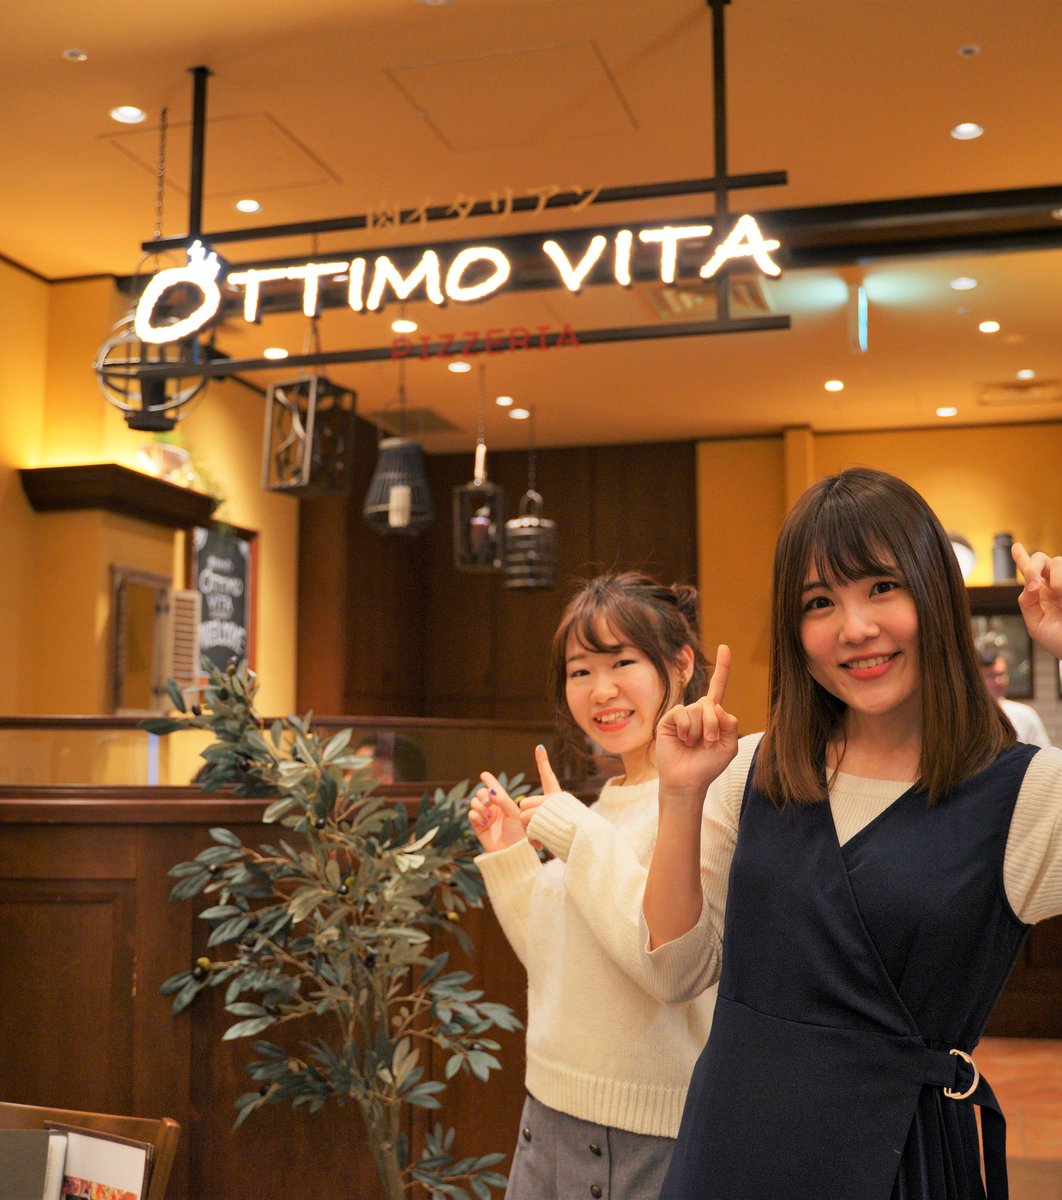 OTTIMO VITA 東急プラザ渋谷店 （オッティモ ヴィータ）